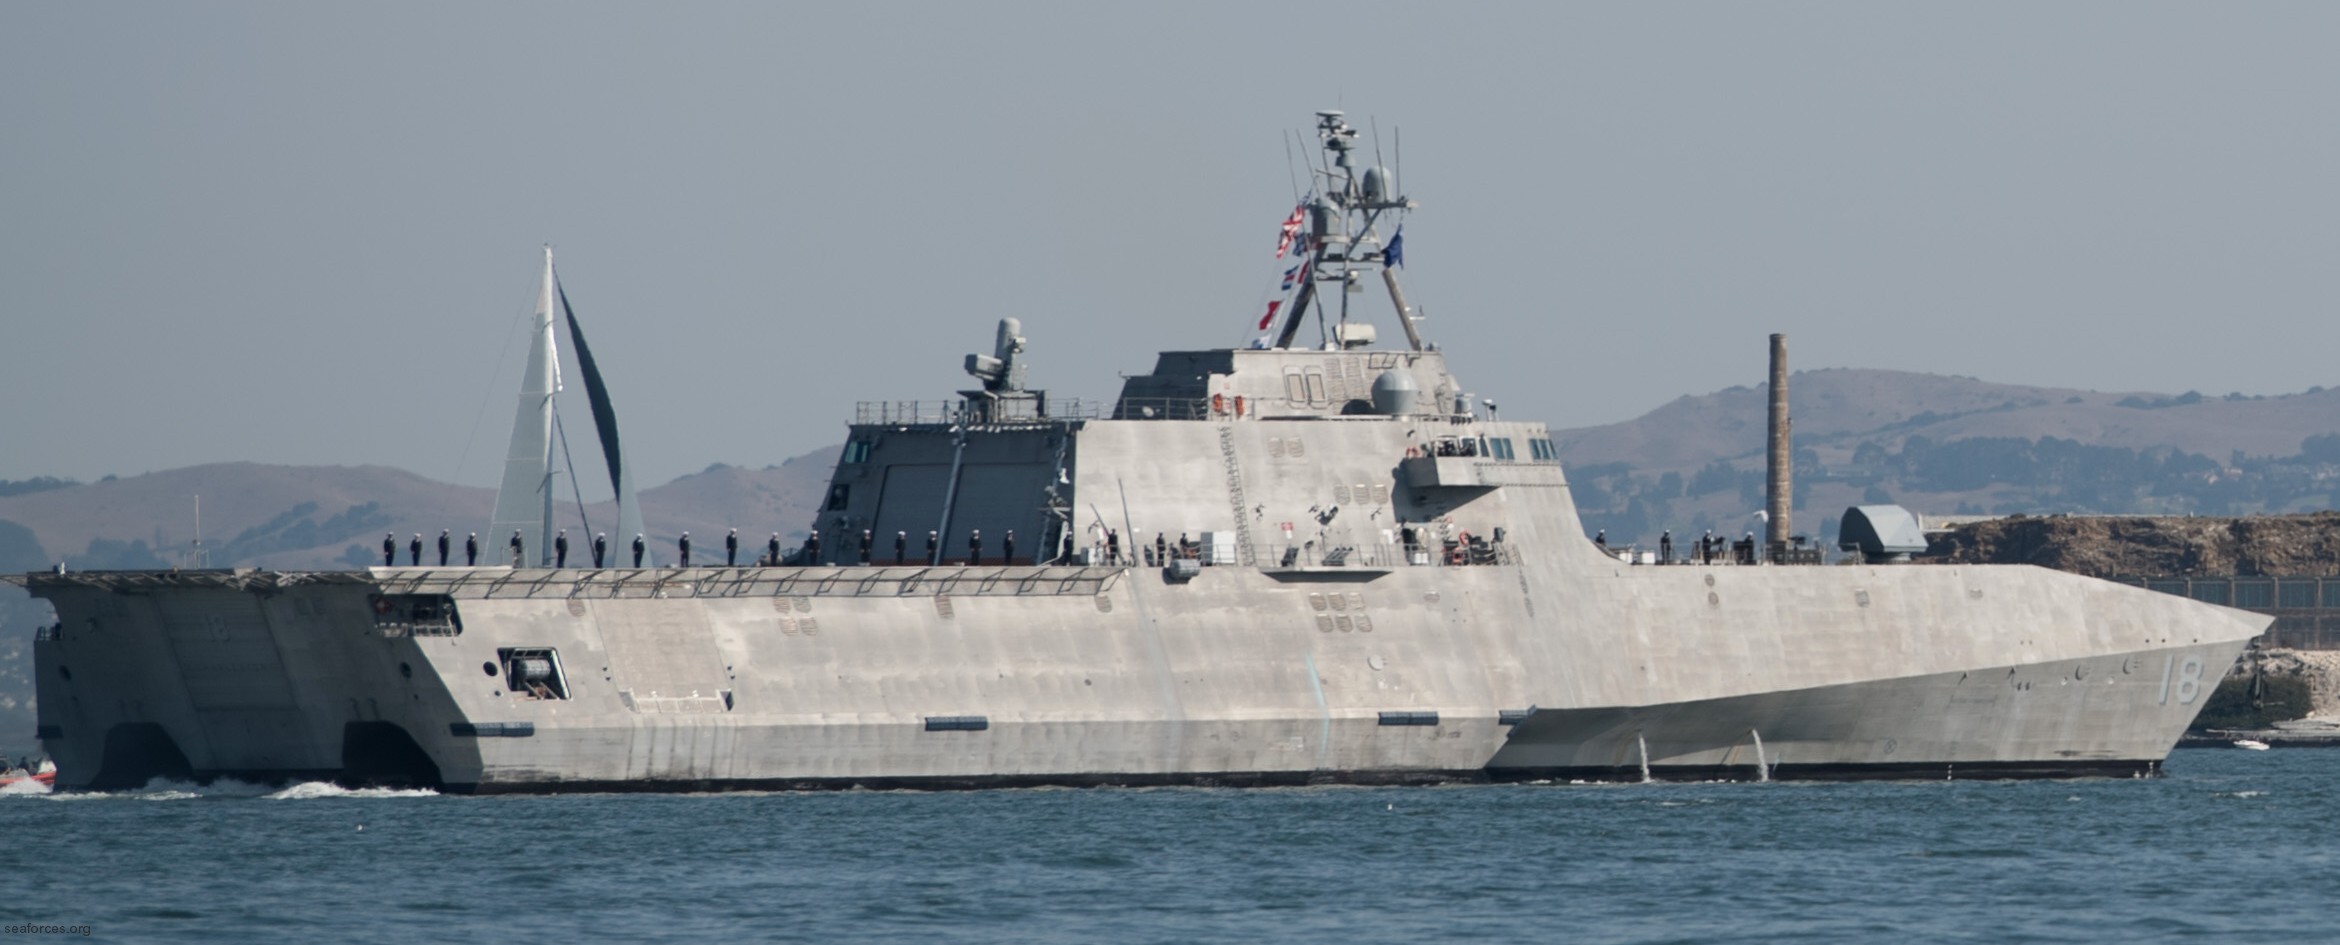 lcs-18 uss charleston littoral combat ship independence class us navy 05 san francisco fleet week